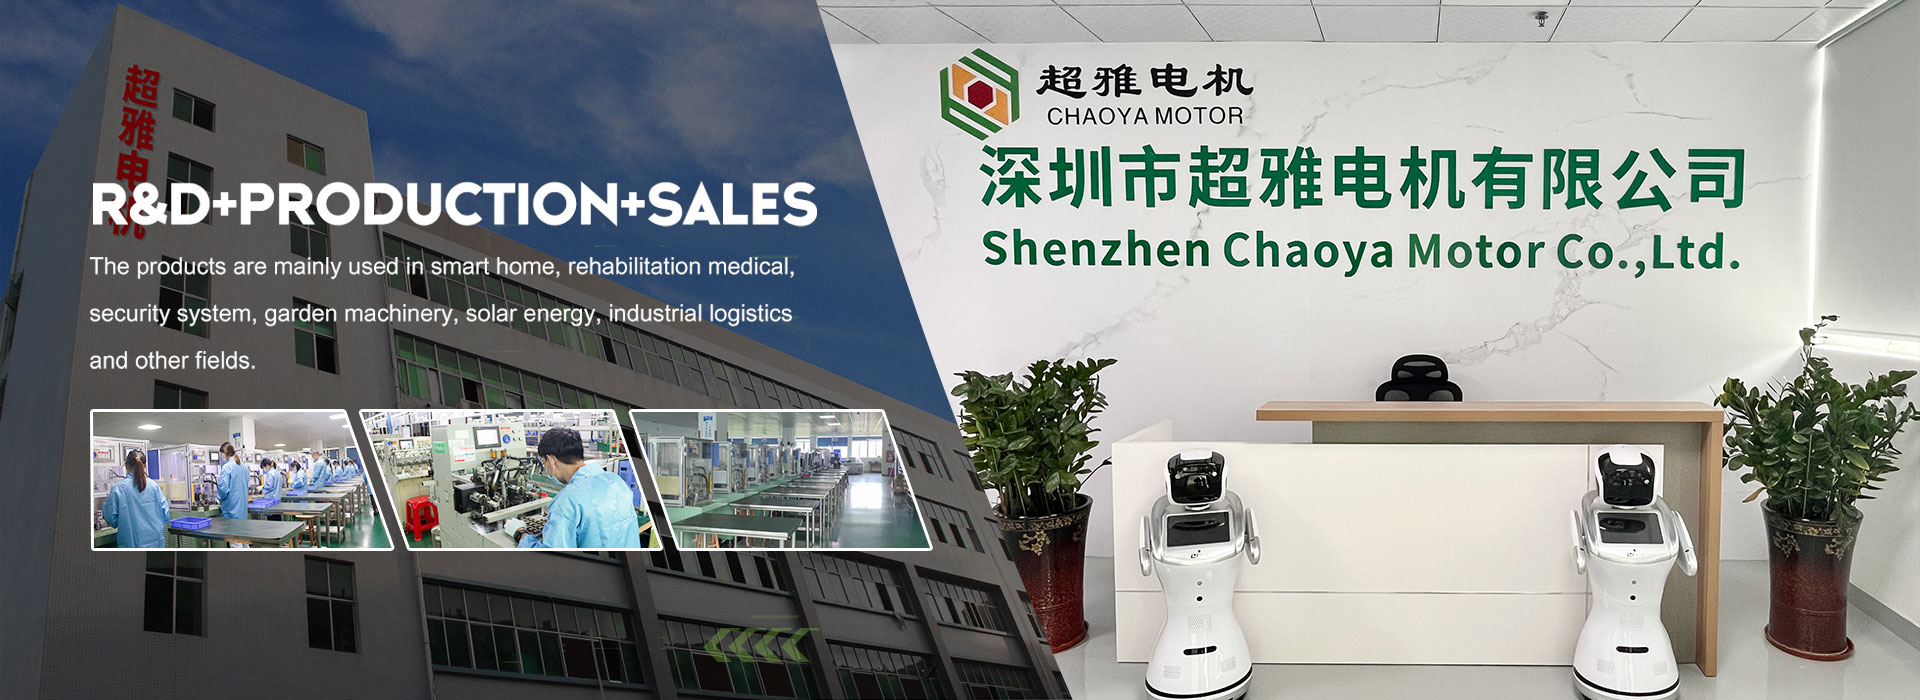 Shenzhen Chaoya Motor Co.,Ltd